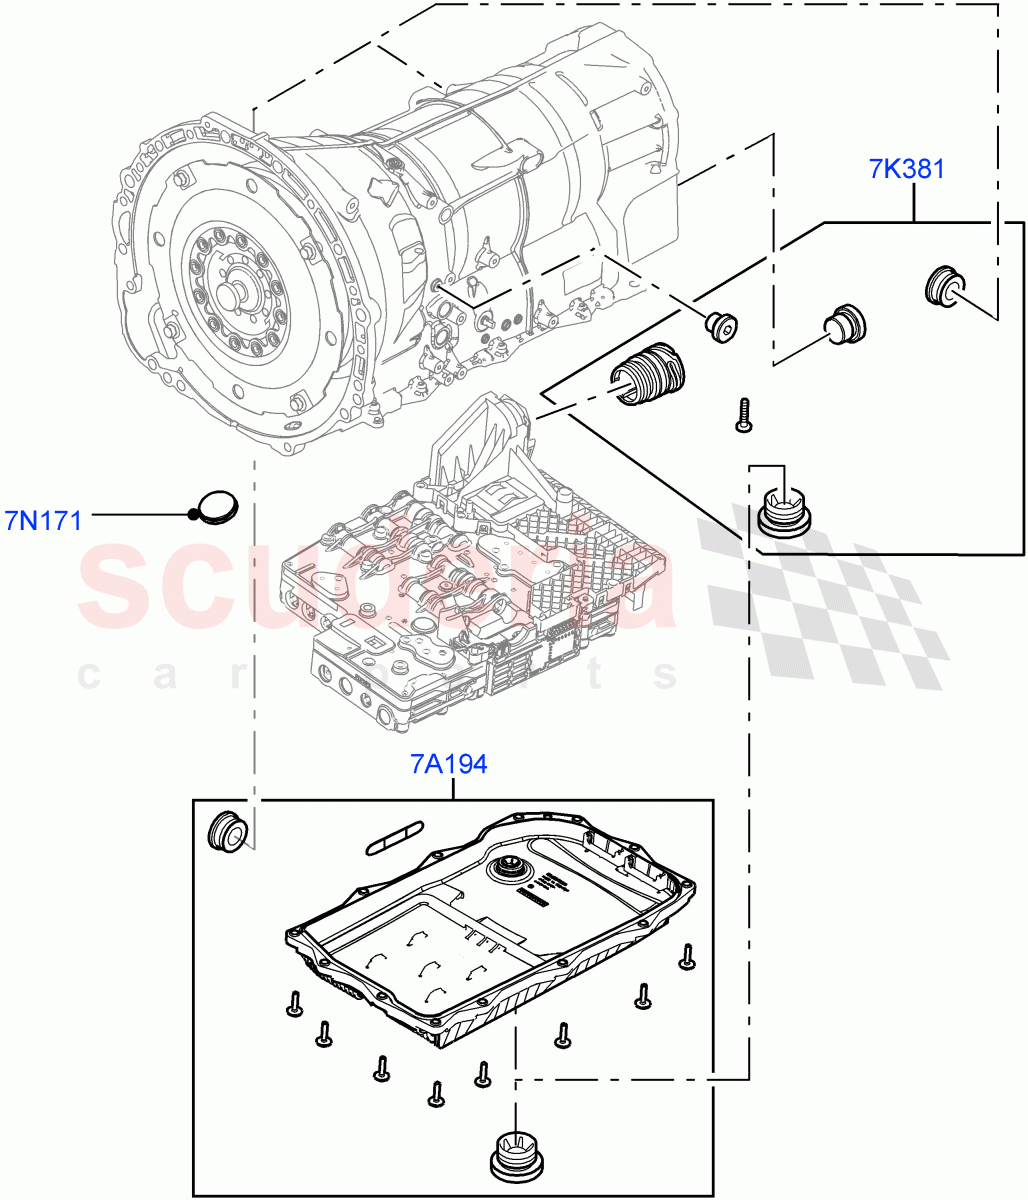 Transmission External Components(Nitra Plant Build)(2.0L I4 DSL HIGH DOHC AJ200,8 Speed Auto Trans ZF 8HP70 4WD,5.0 Petrol AJ133 DOHC CDA)((V)FROMK2000001) of Land Rover Land Rover Discovery 5 (2017+) [2.0 Turbo Petrol AJ200P]